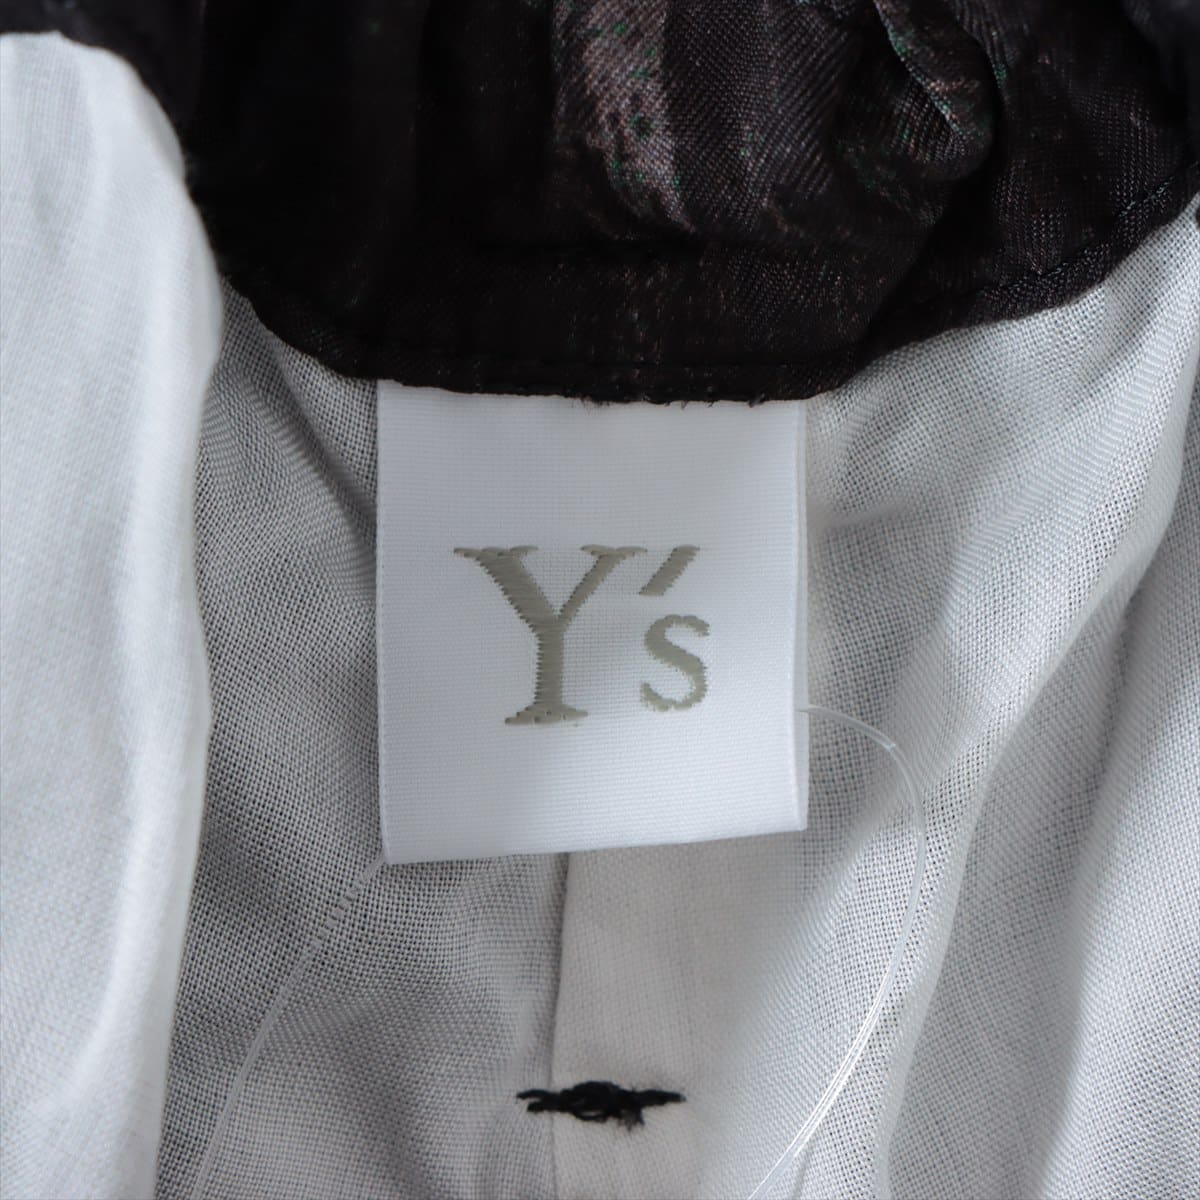 Y's Cuprammonium rayon Harem pants 2 Ladies' Black x Gray  YU-P24-206